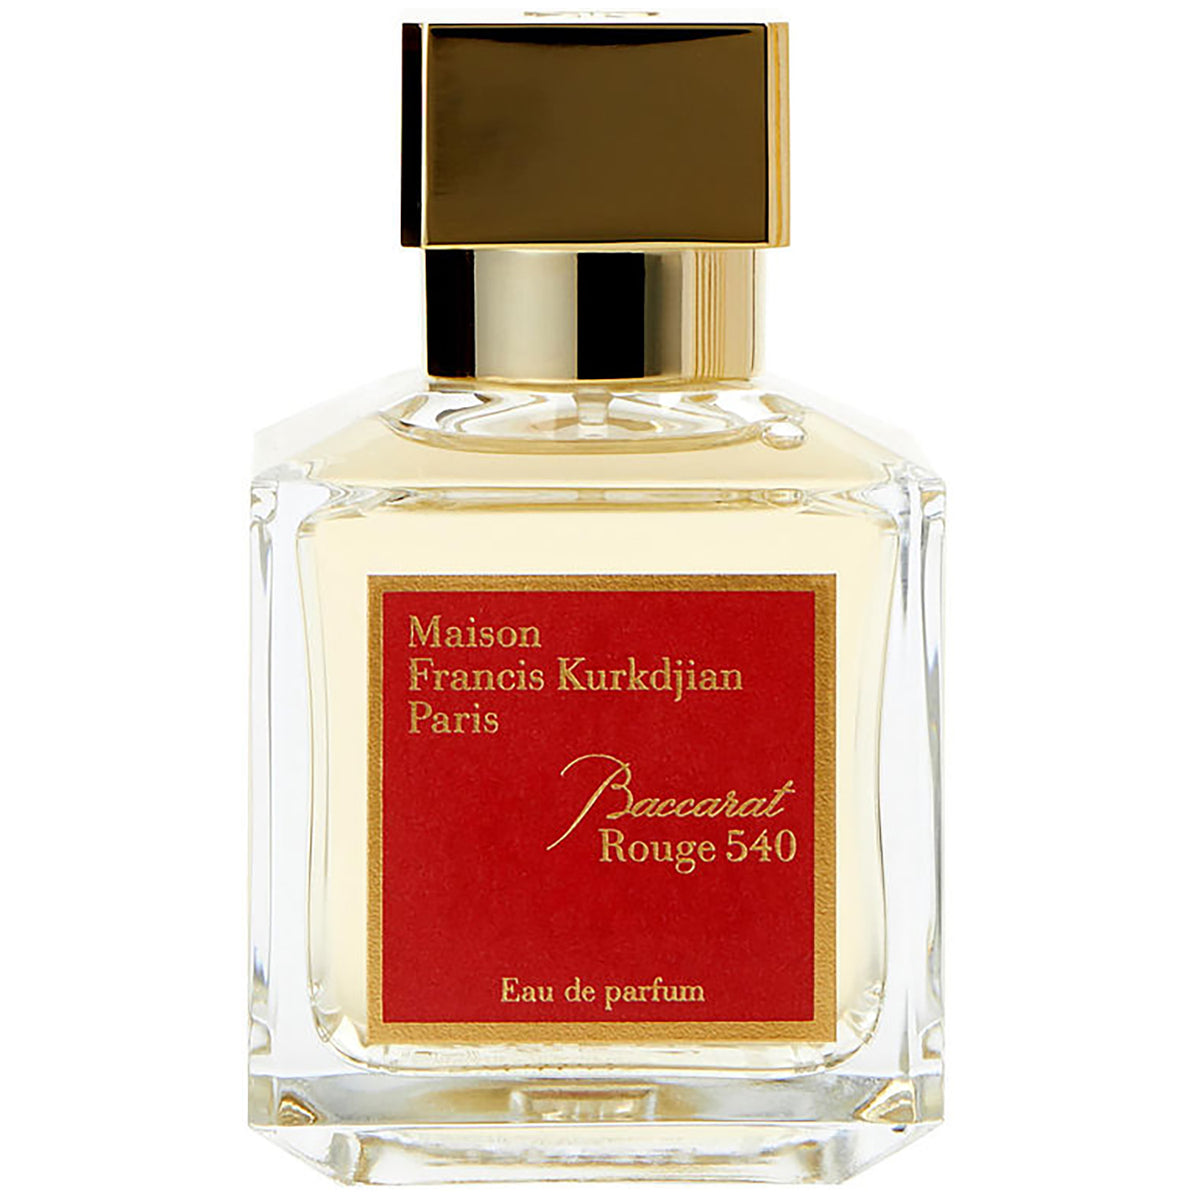 Baccarat Rouge 540 by Maison Francis Kurkdjian Fragrance Samples